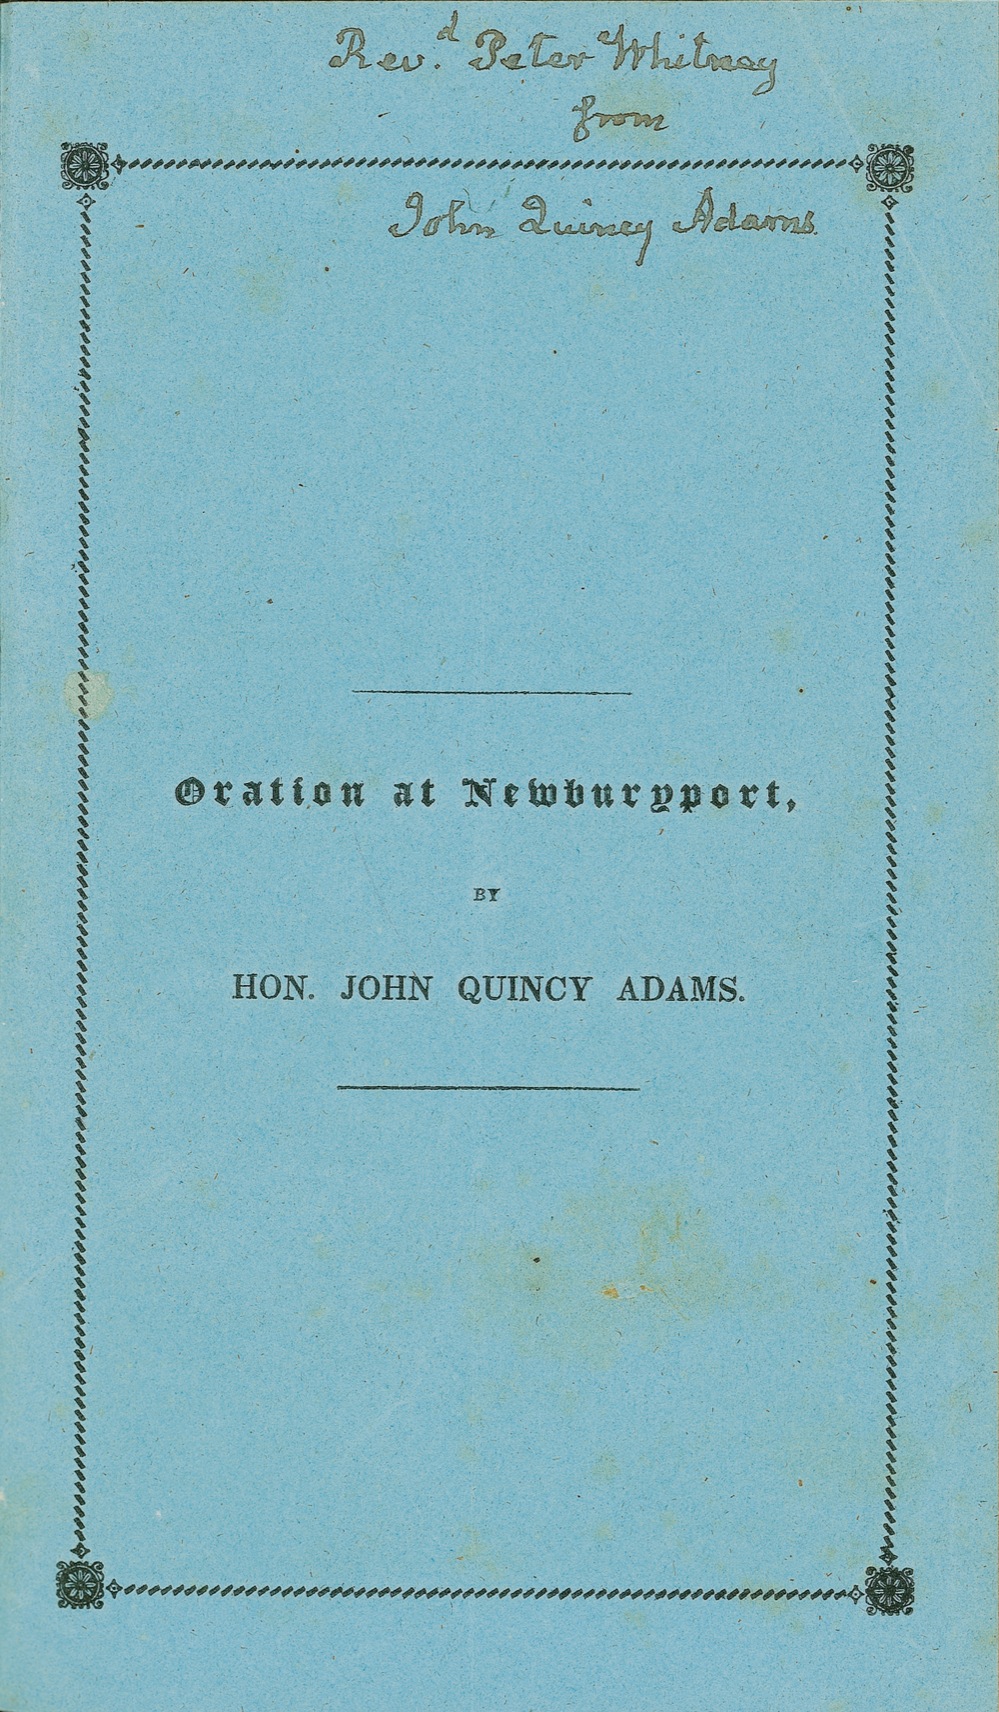 Lot #5 John Quincy Adams